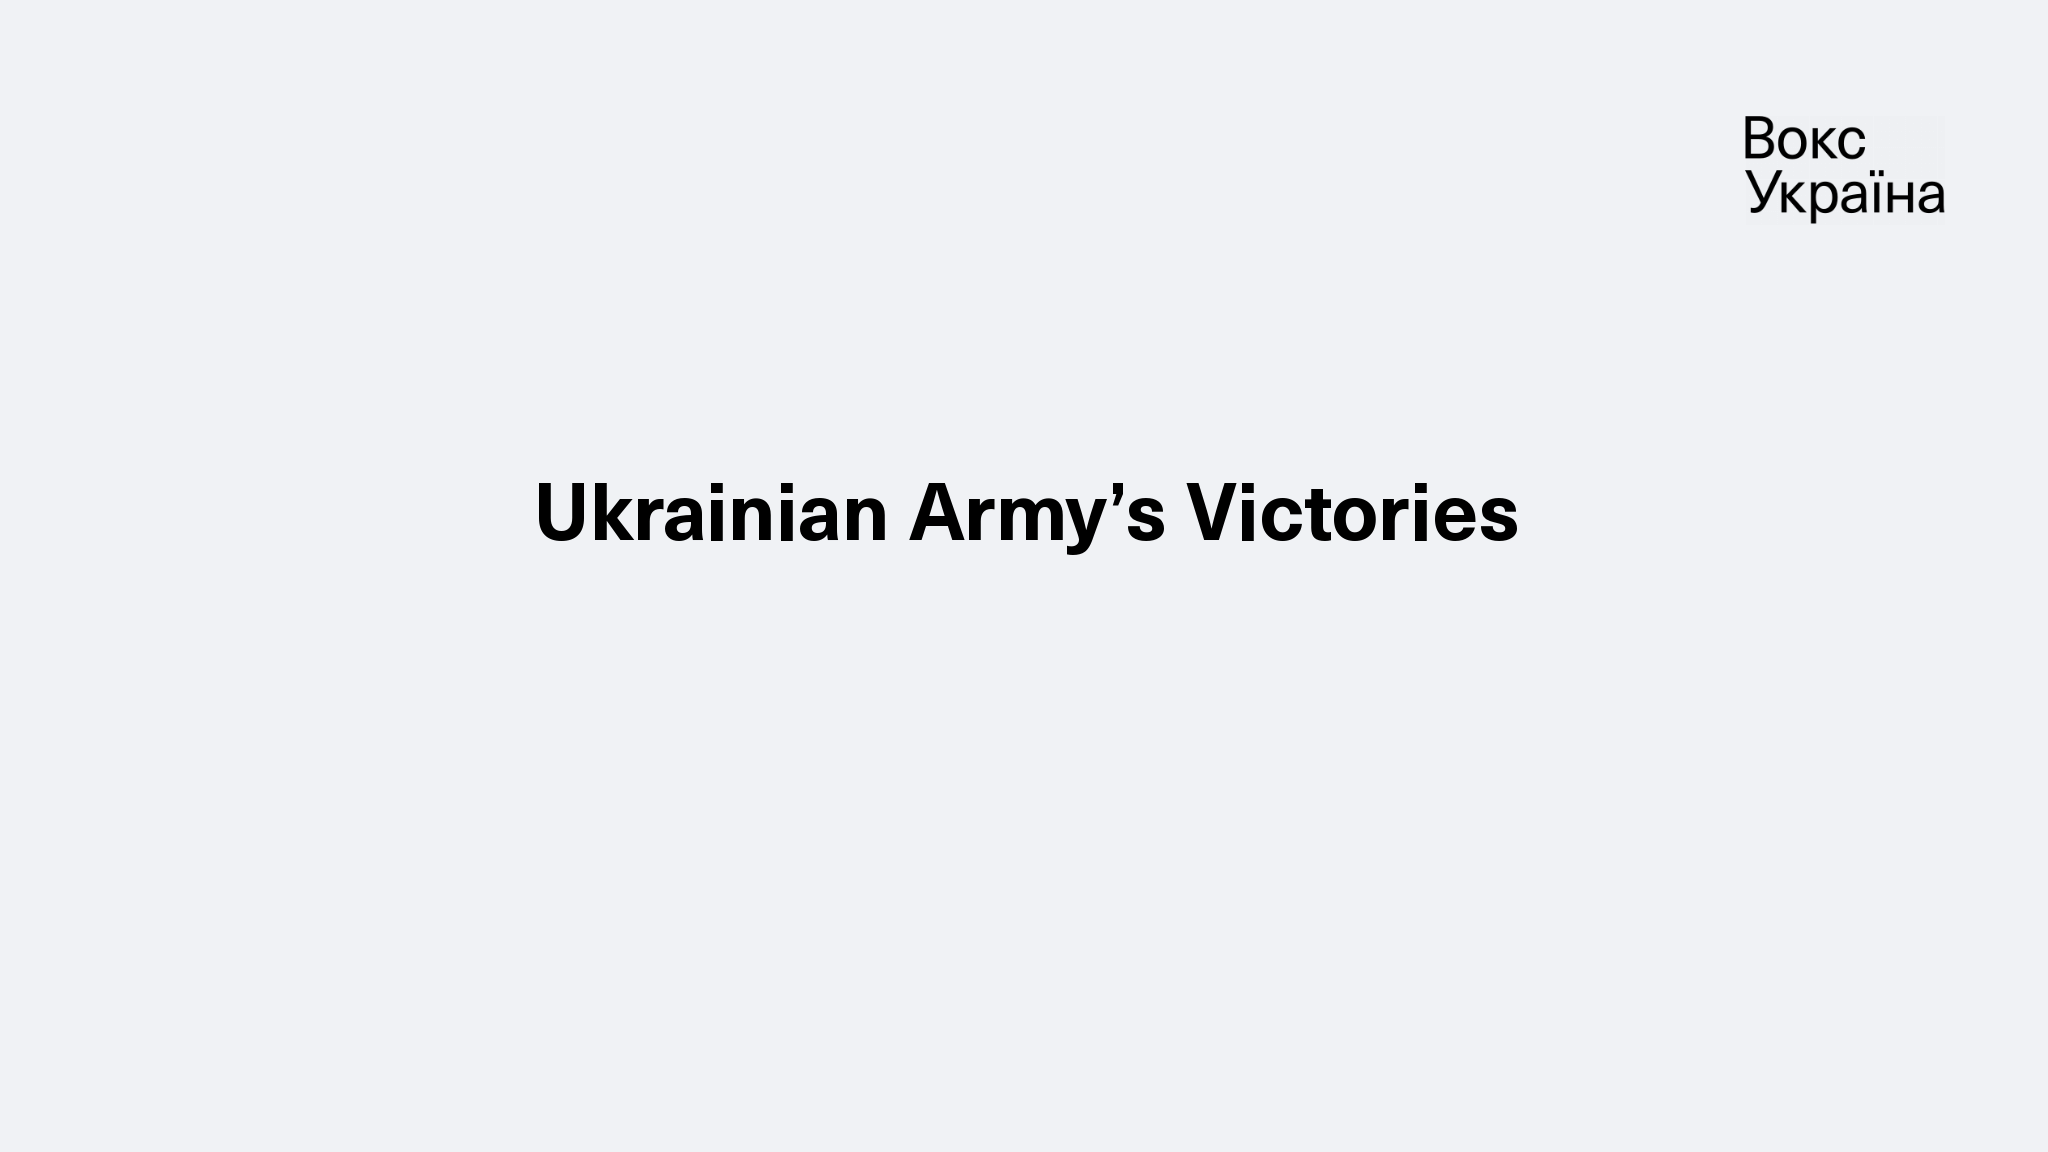 Fortnite players donate $100 million to Ukraine